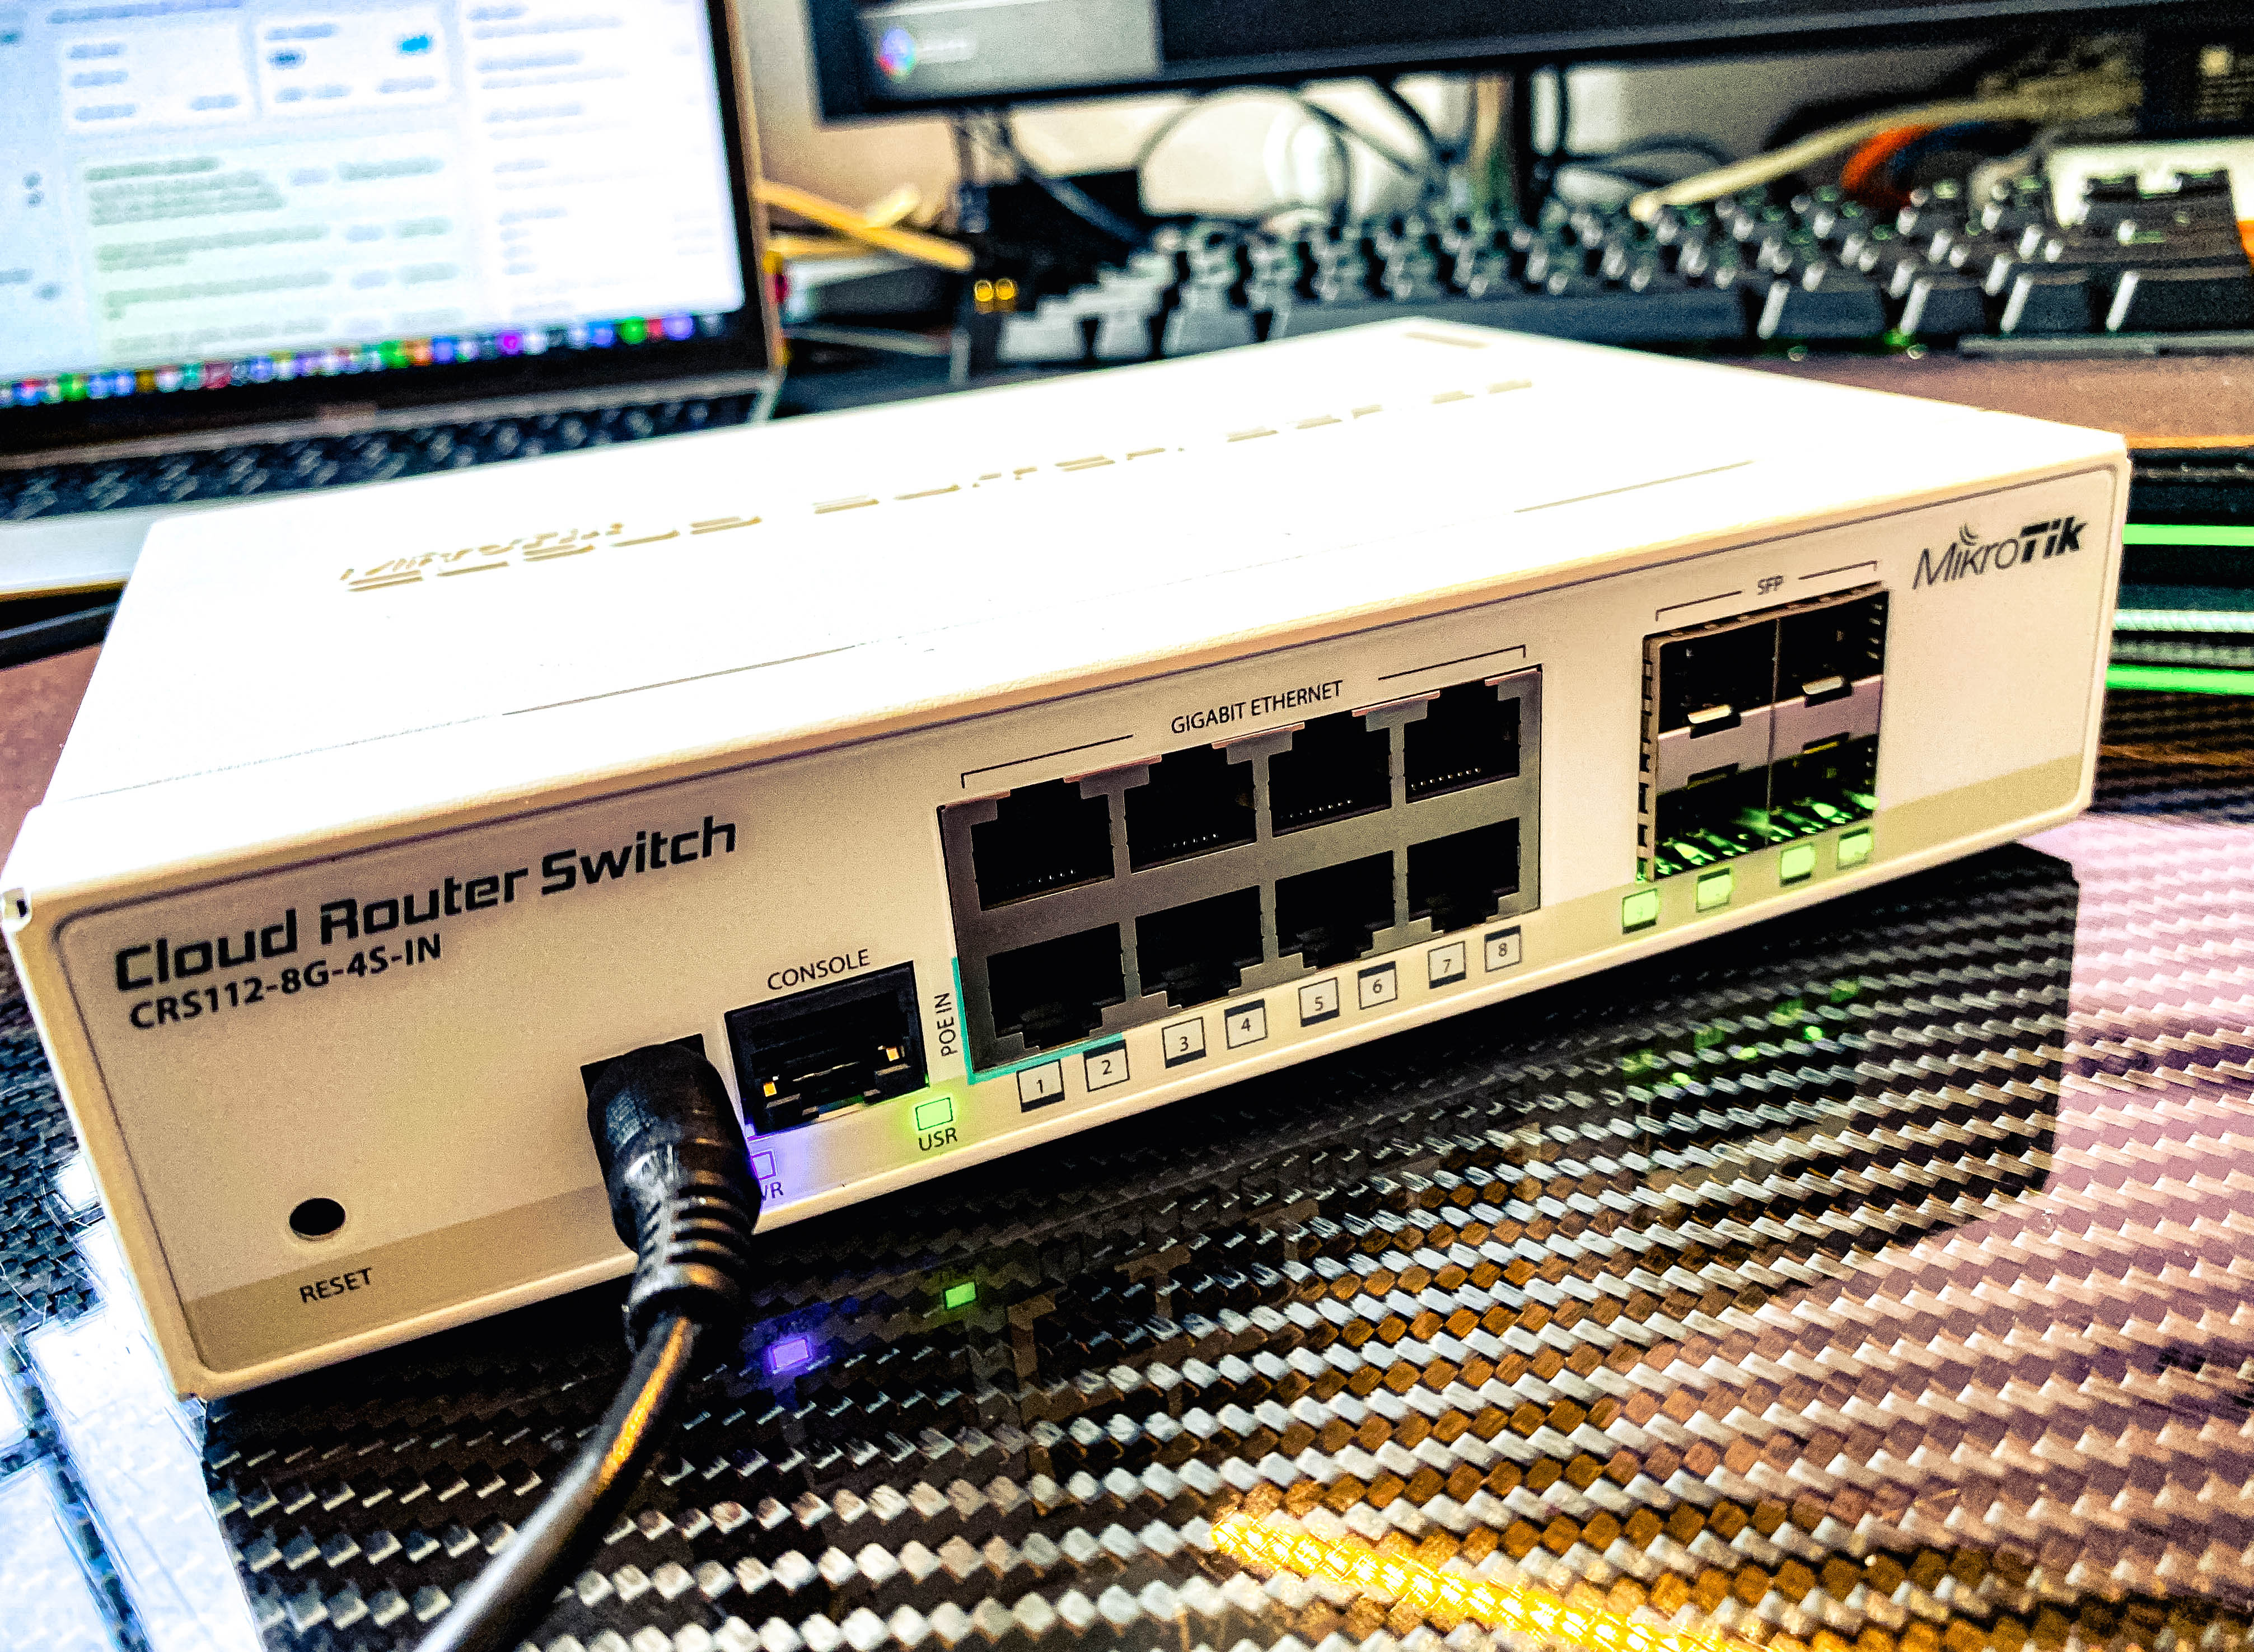 Crs112 8p 4s in. Mikrotik cloud Router Switch. Mikrotik cloud Router.